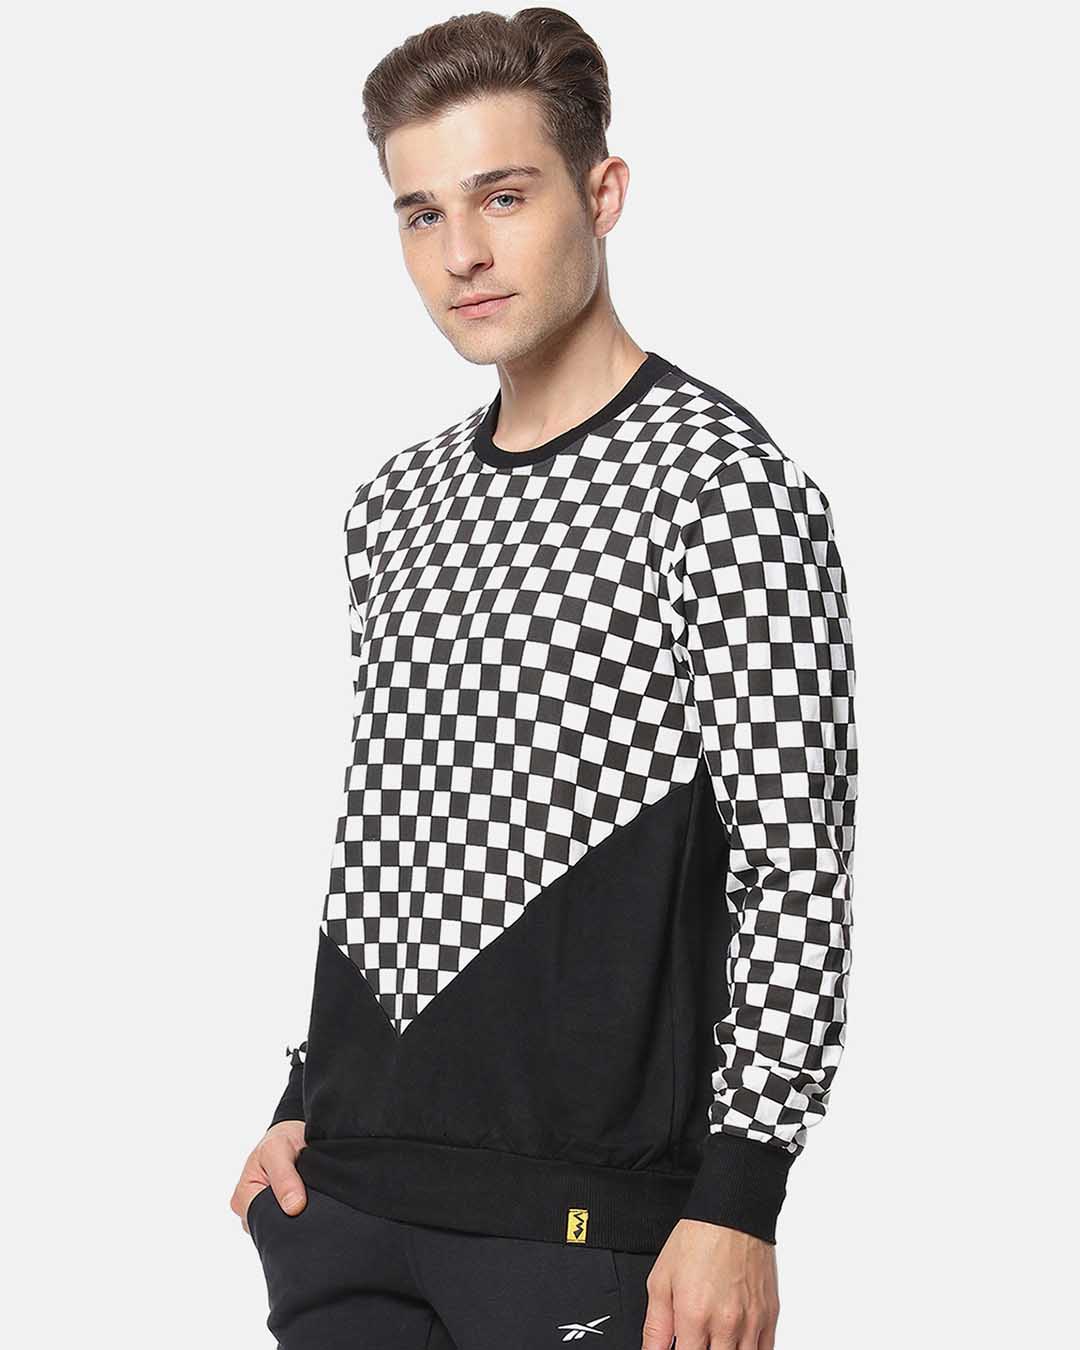 Shop Full Sleeve Checks Men Stylish Casual Sweatshirt-Back